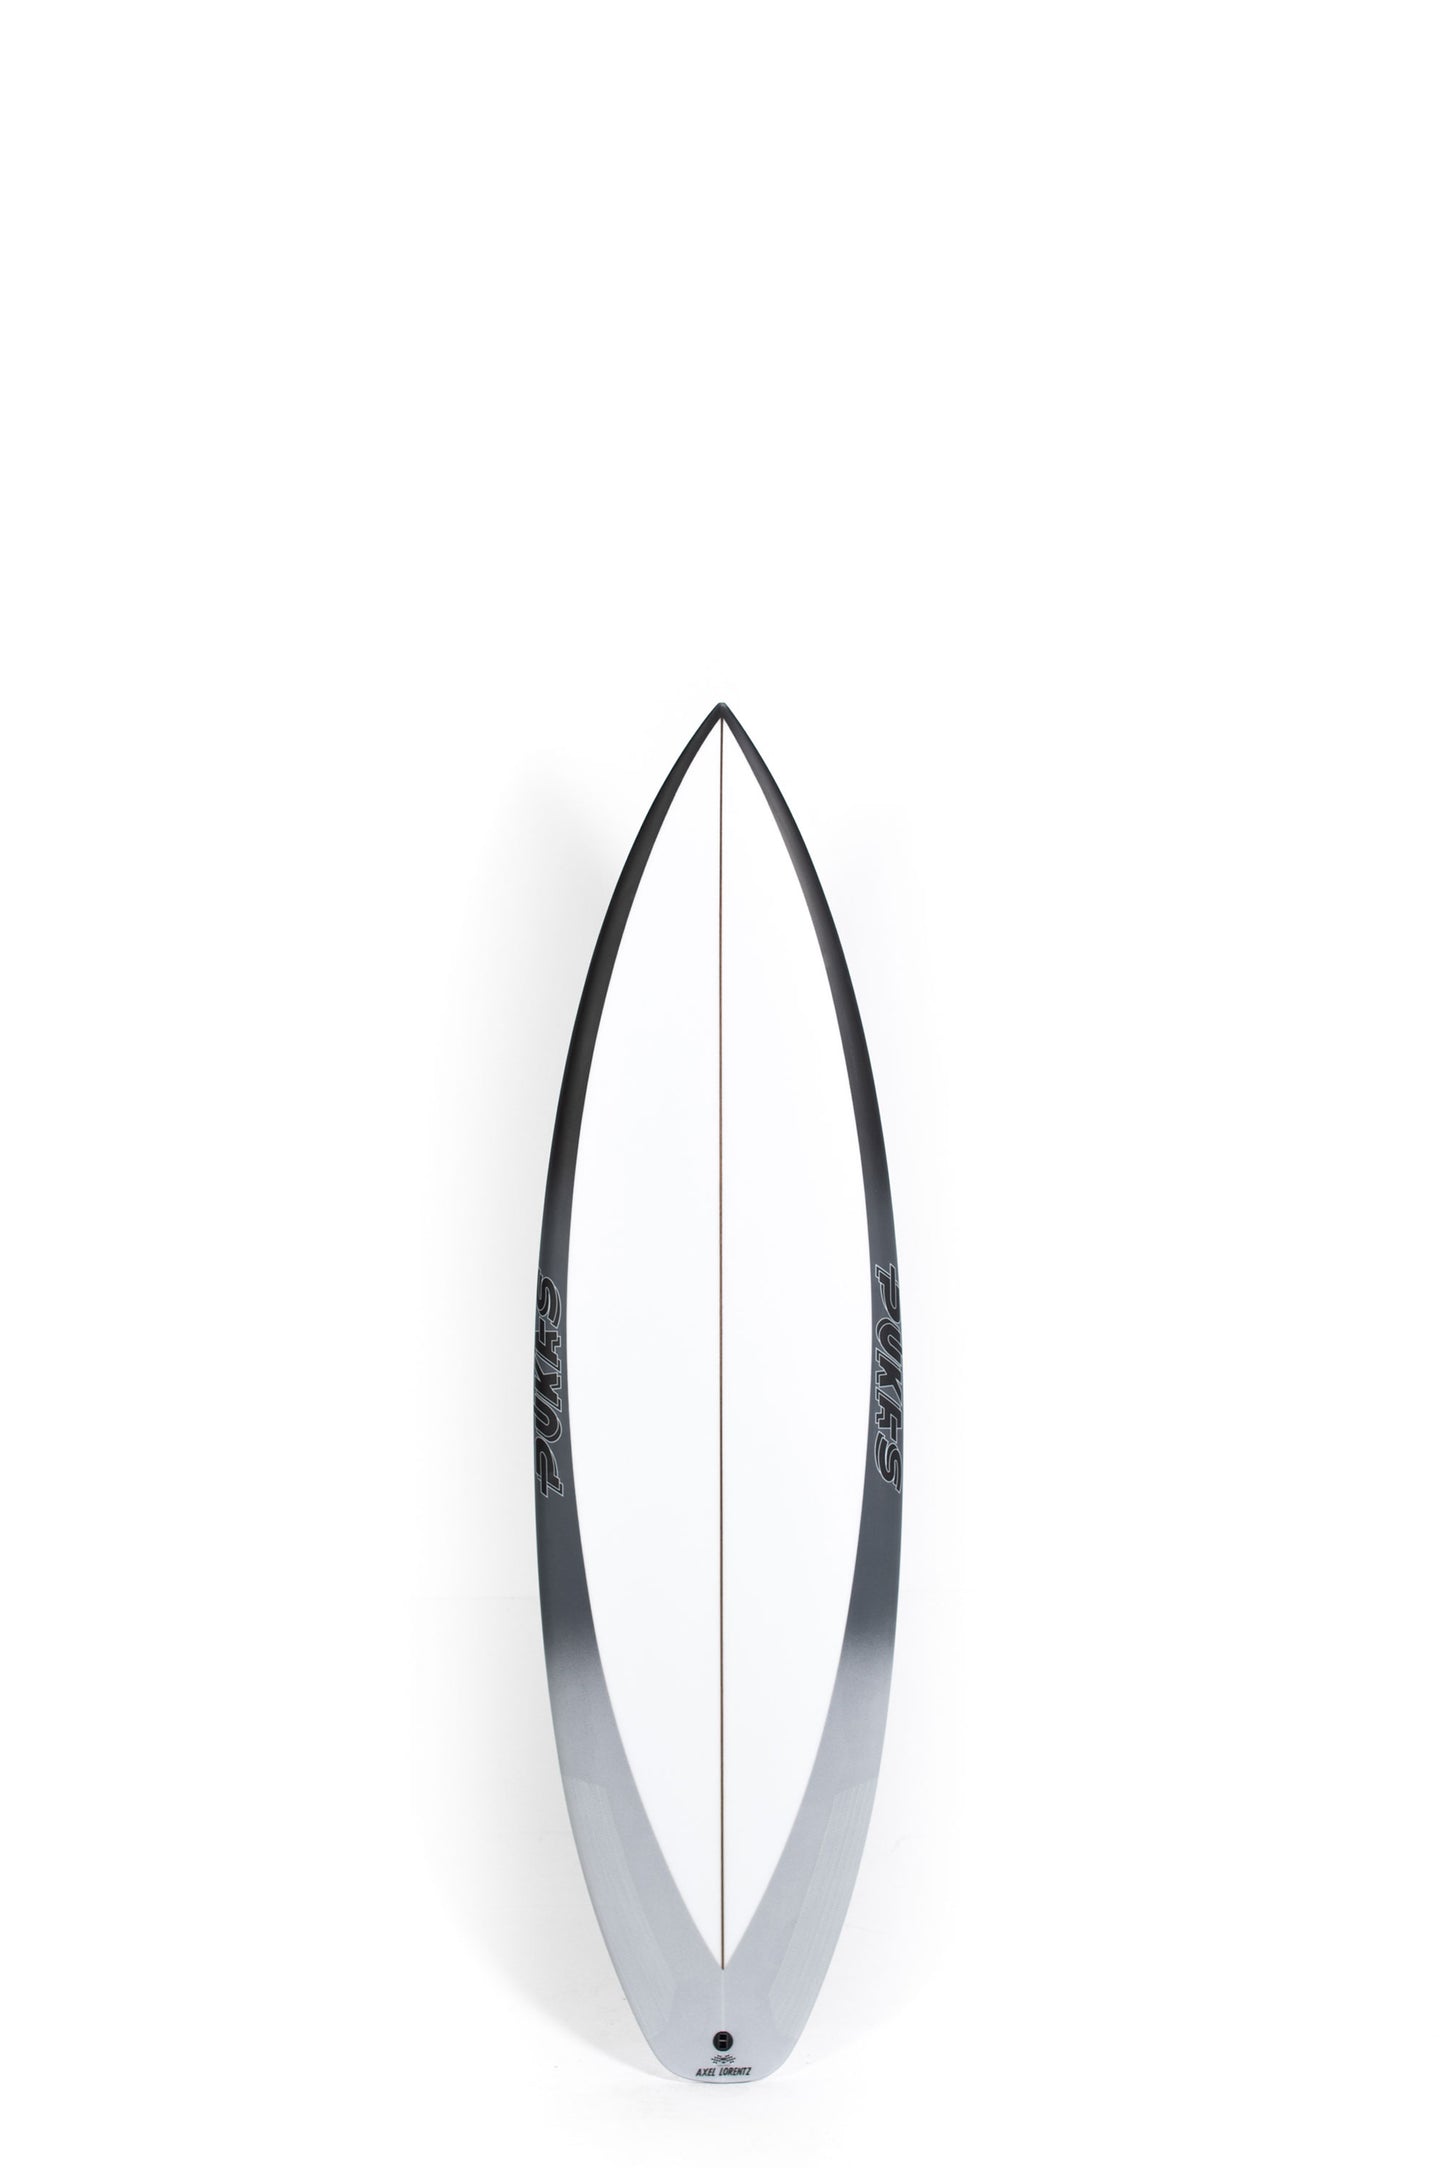 Pukas Surf Shop - Pukas Surfboard - TASTY TREAT ALL ROUND by Axel Lorentz - 6'0" x 19.63 x 2.55 x 31.96L - AX09873